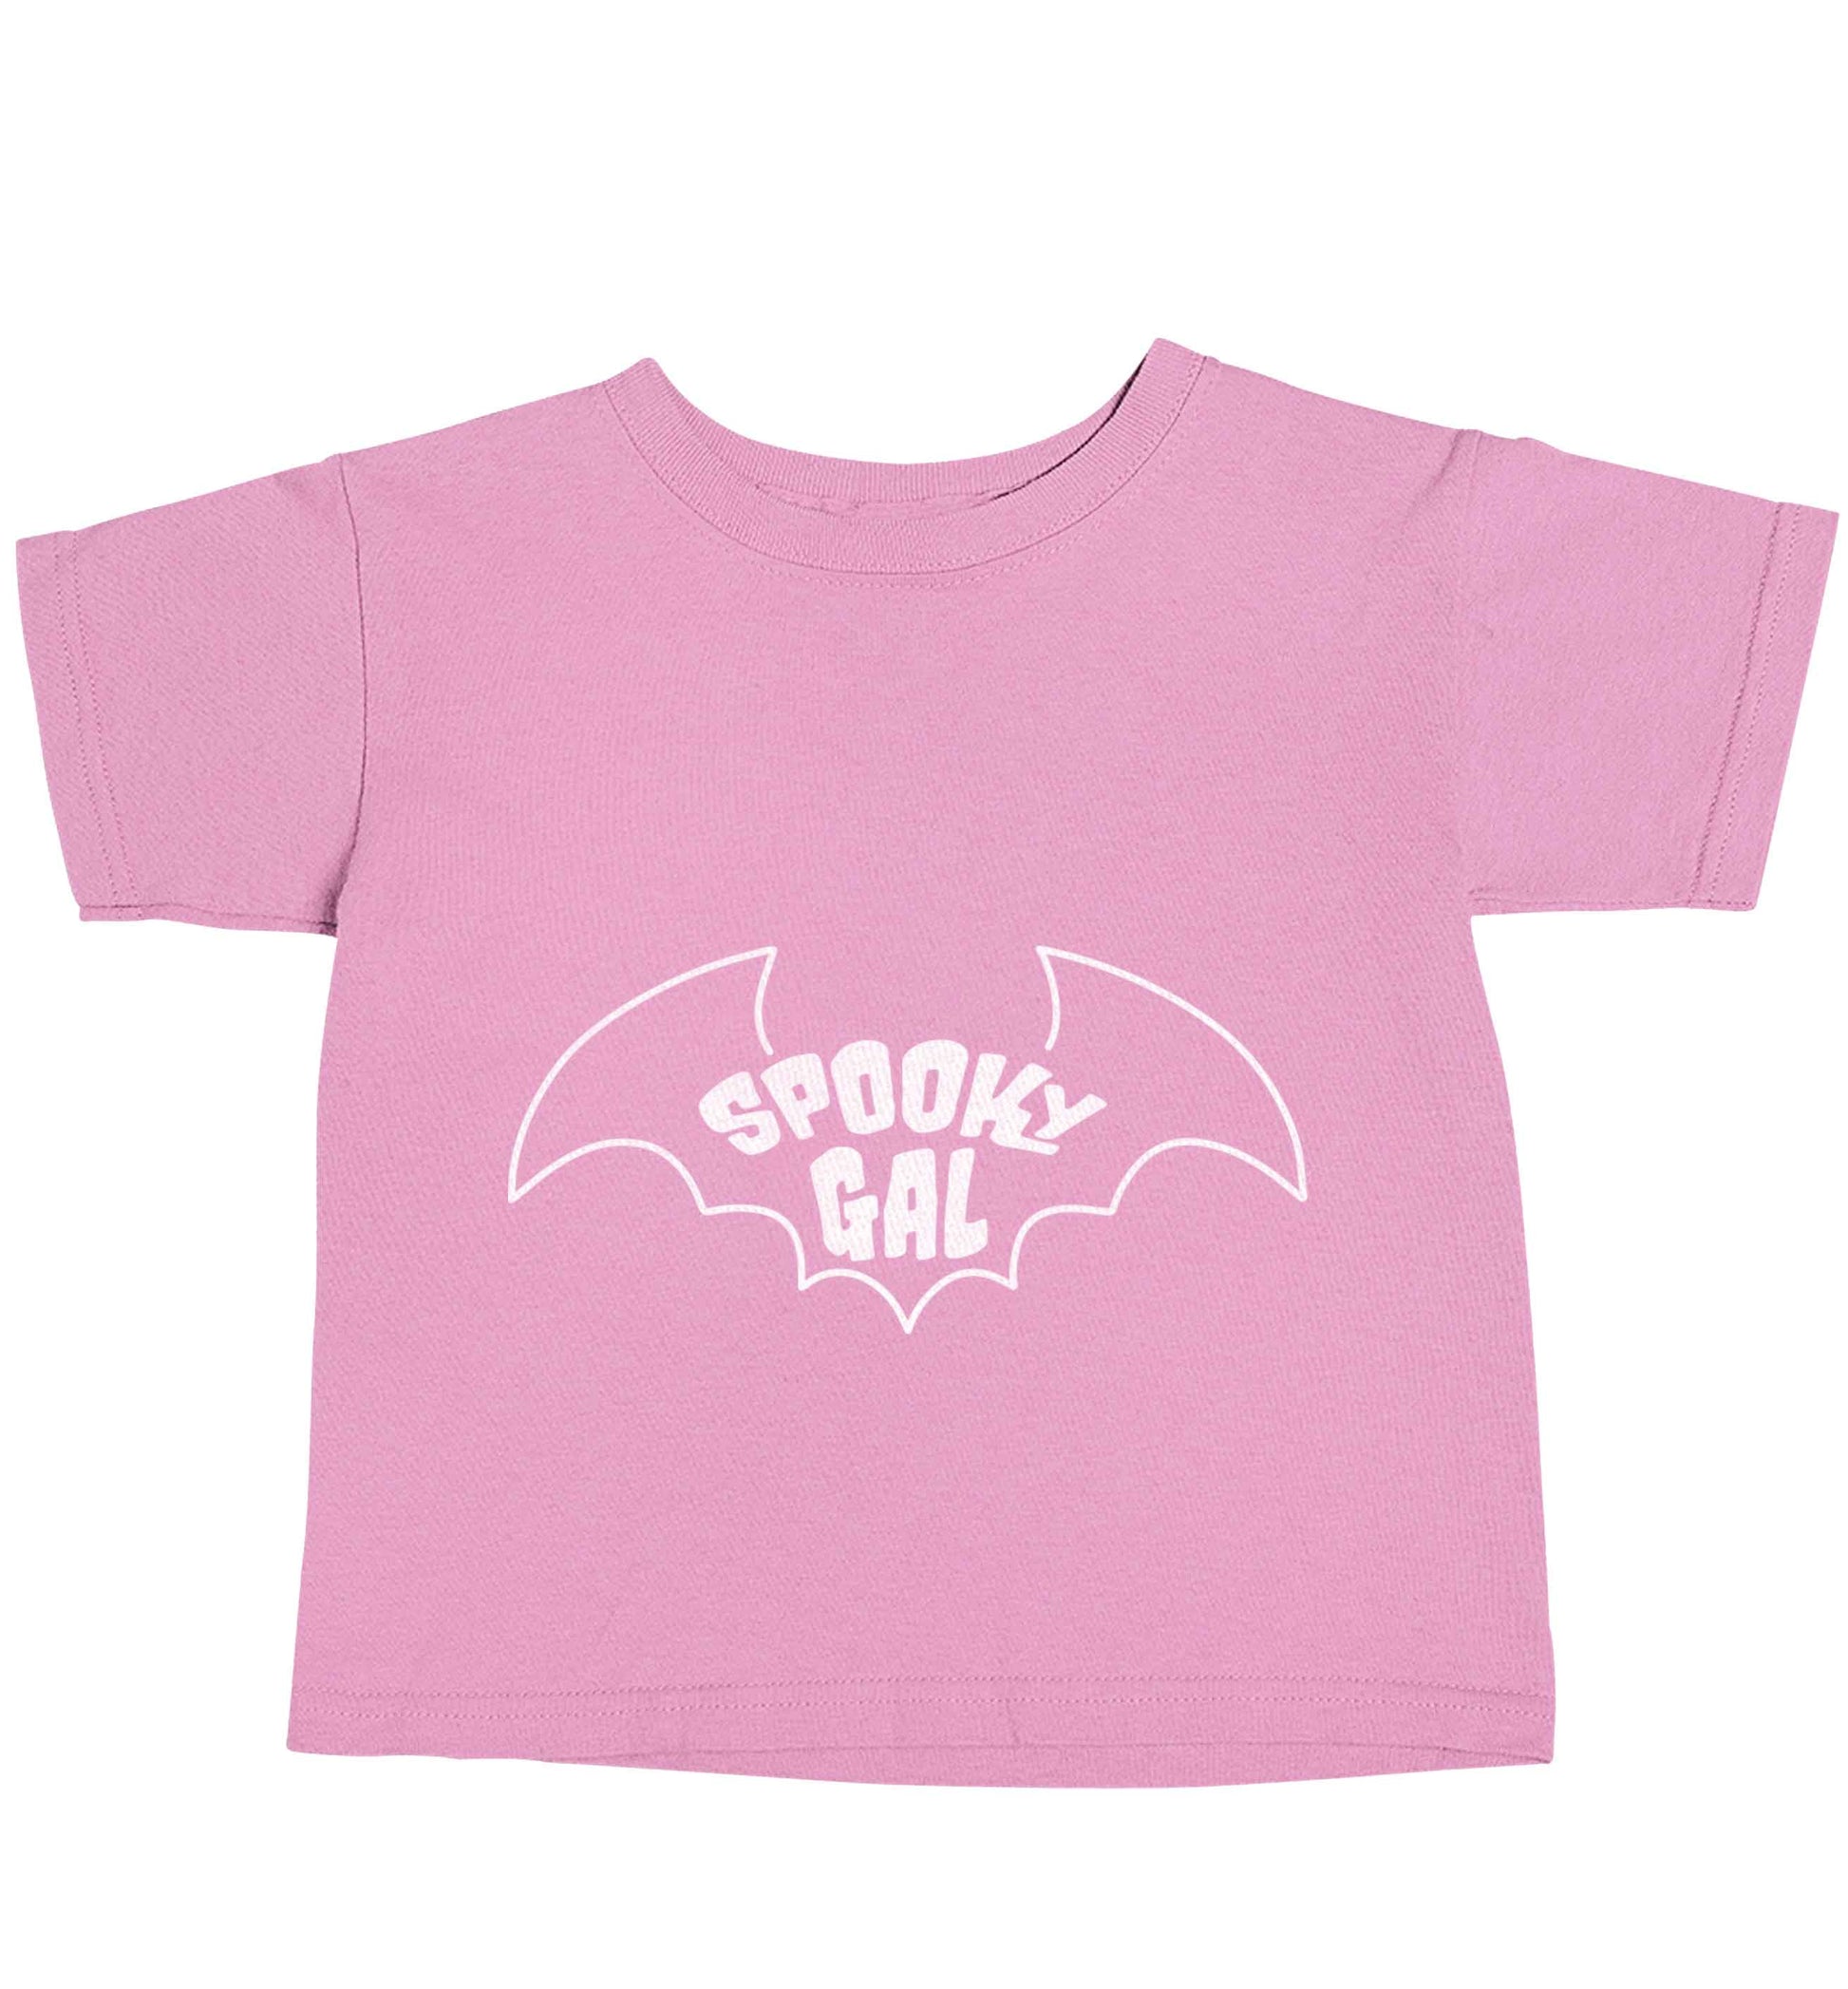 Spooky gal Kit light pink baby toddler Tshirt 2 Years